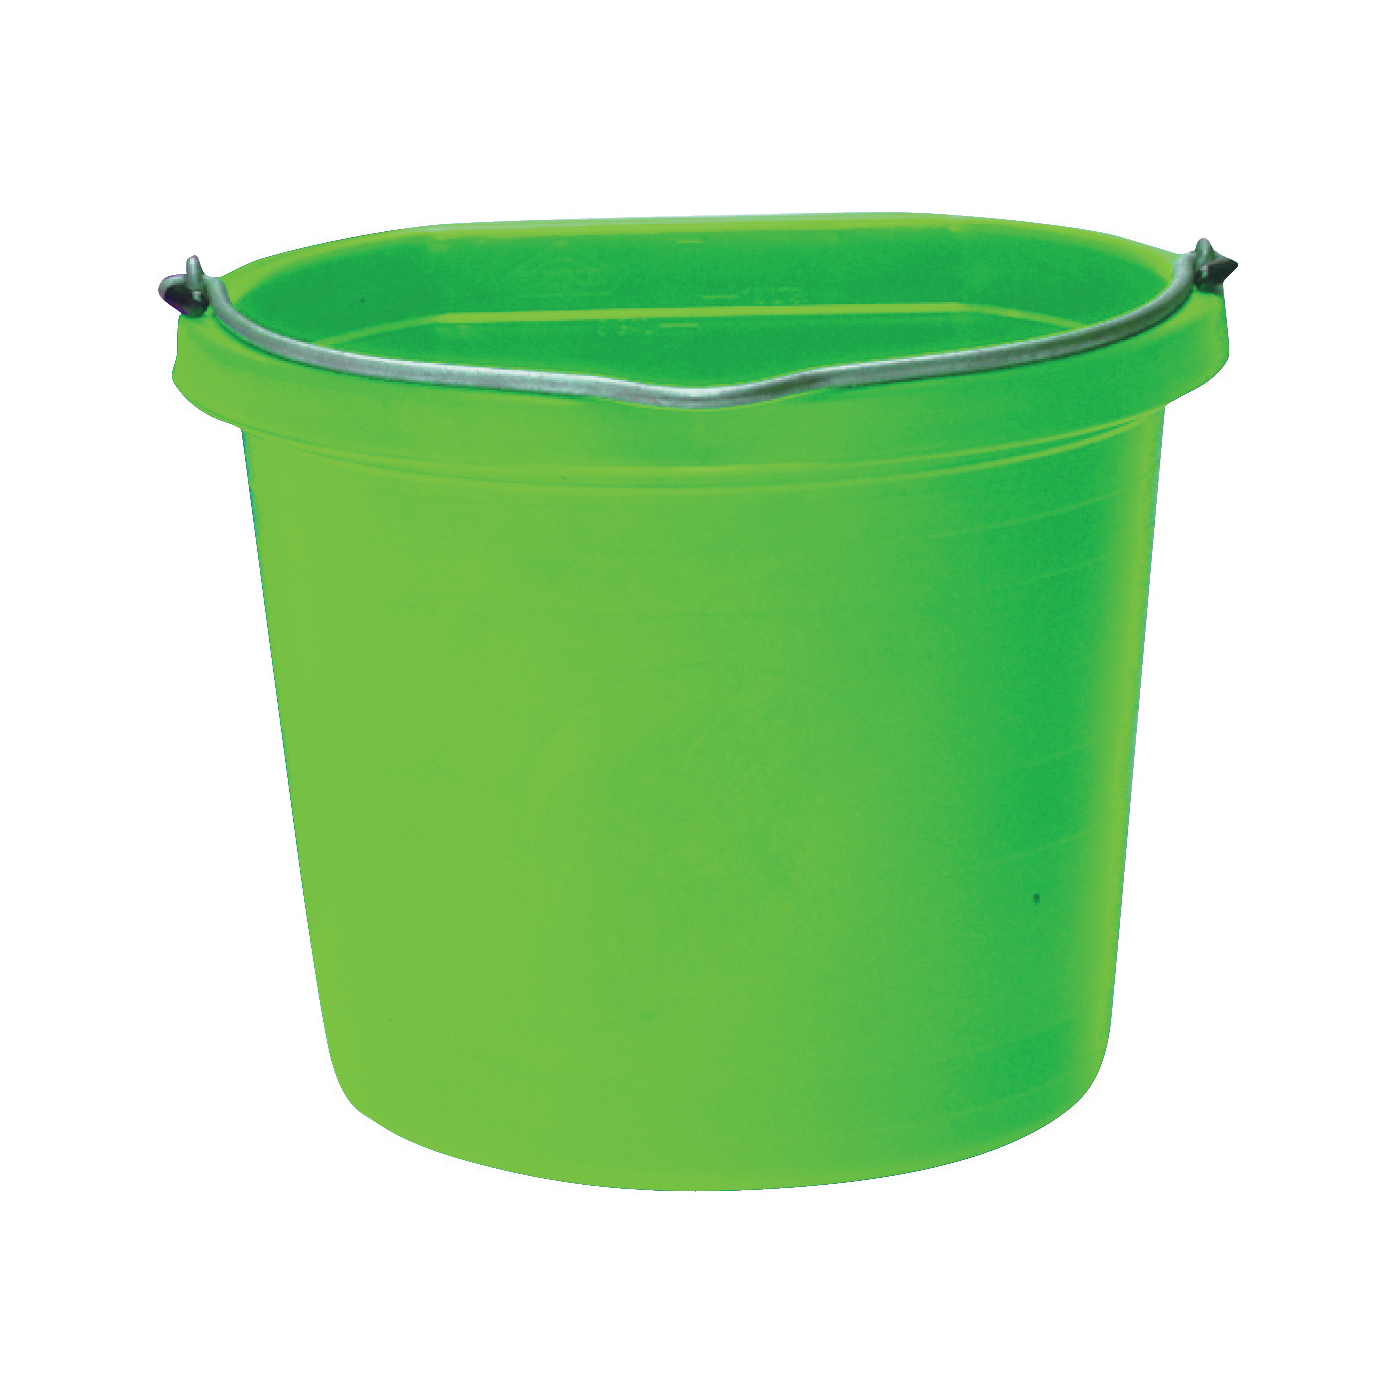 1302043 Bucket, 20 qt Volume, 2-Compartment, Polyethylene Resin, Green